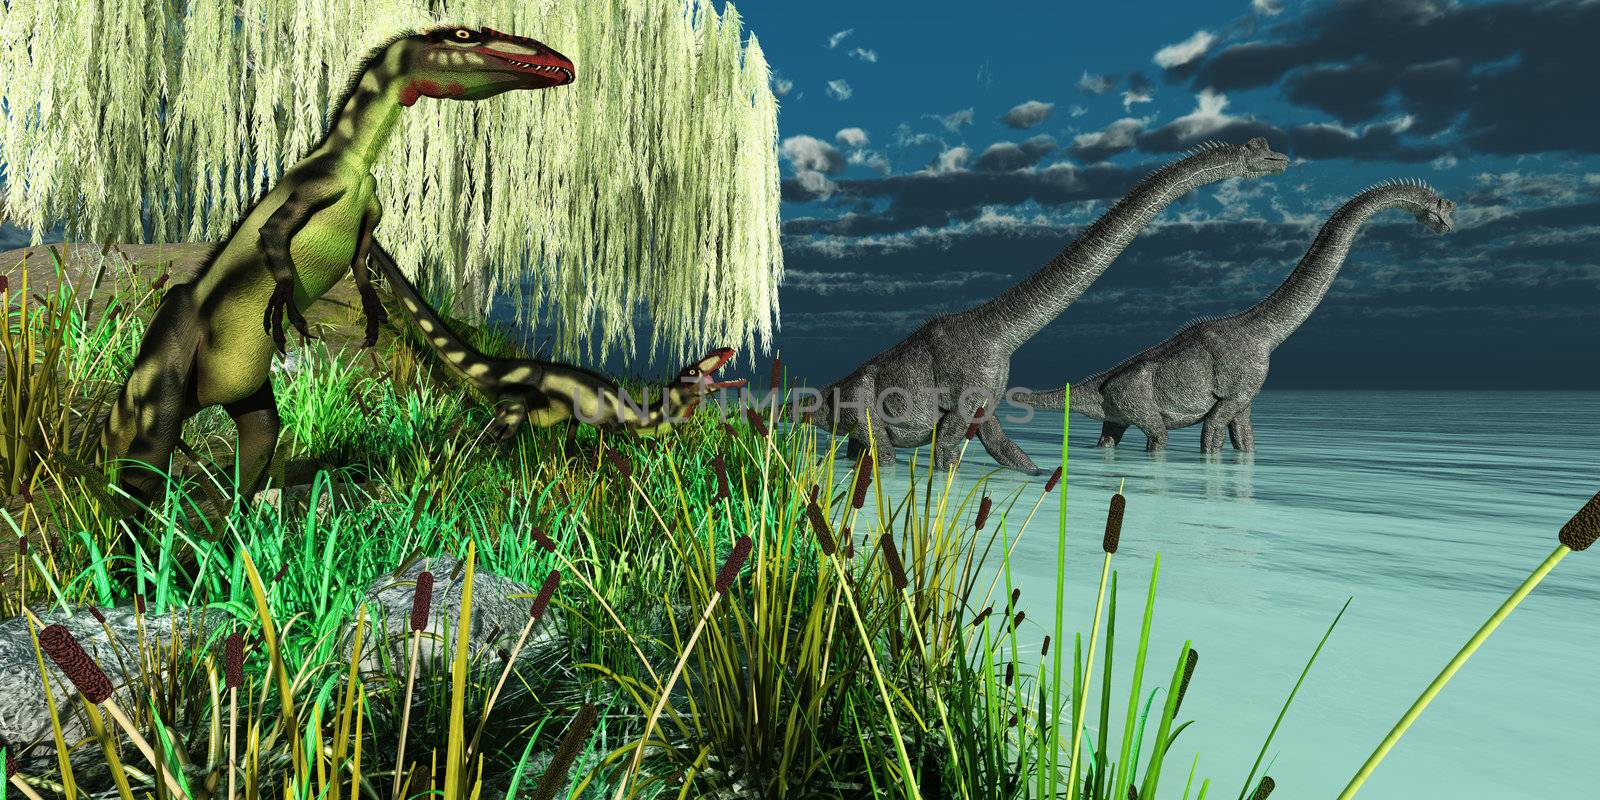 Brachiosaurus and Dilong Dinosaurs by Catmando